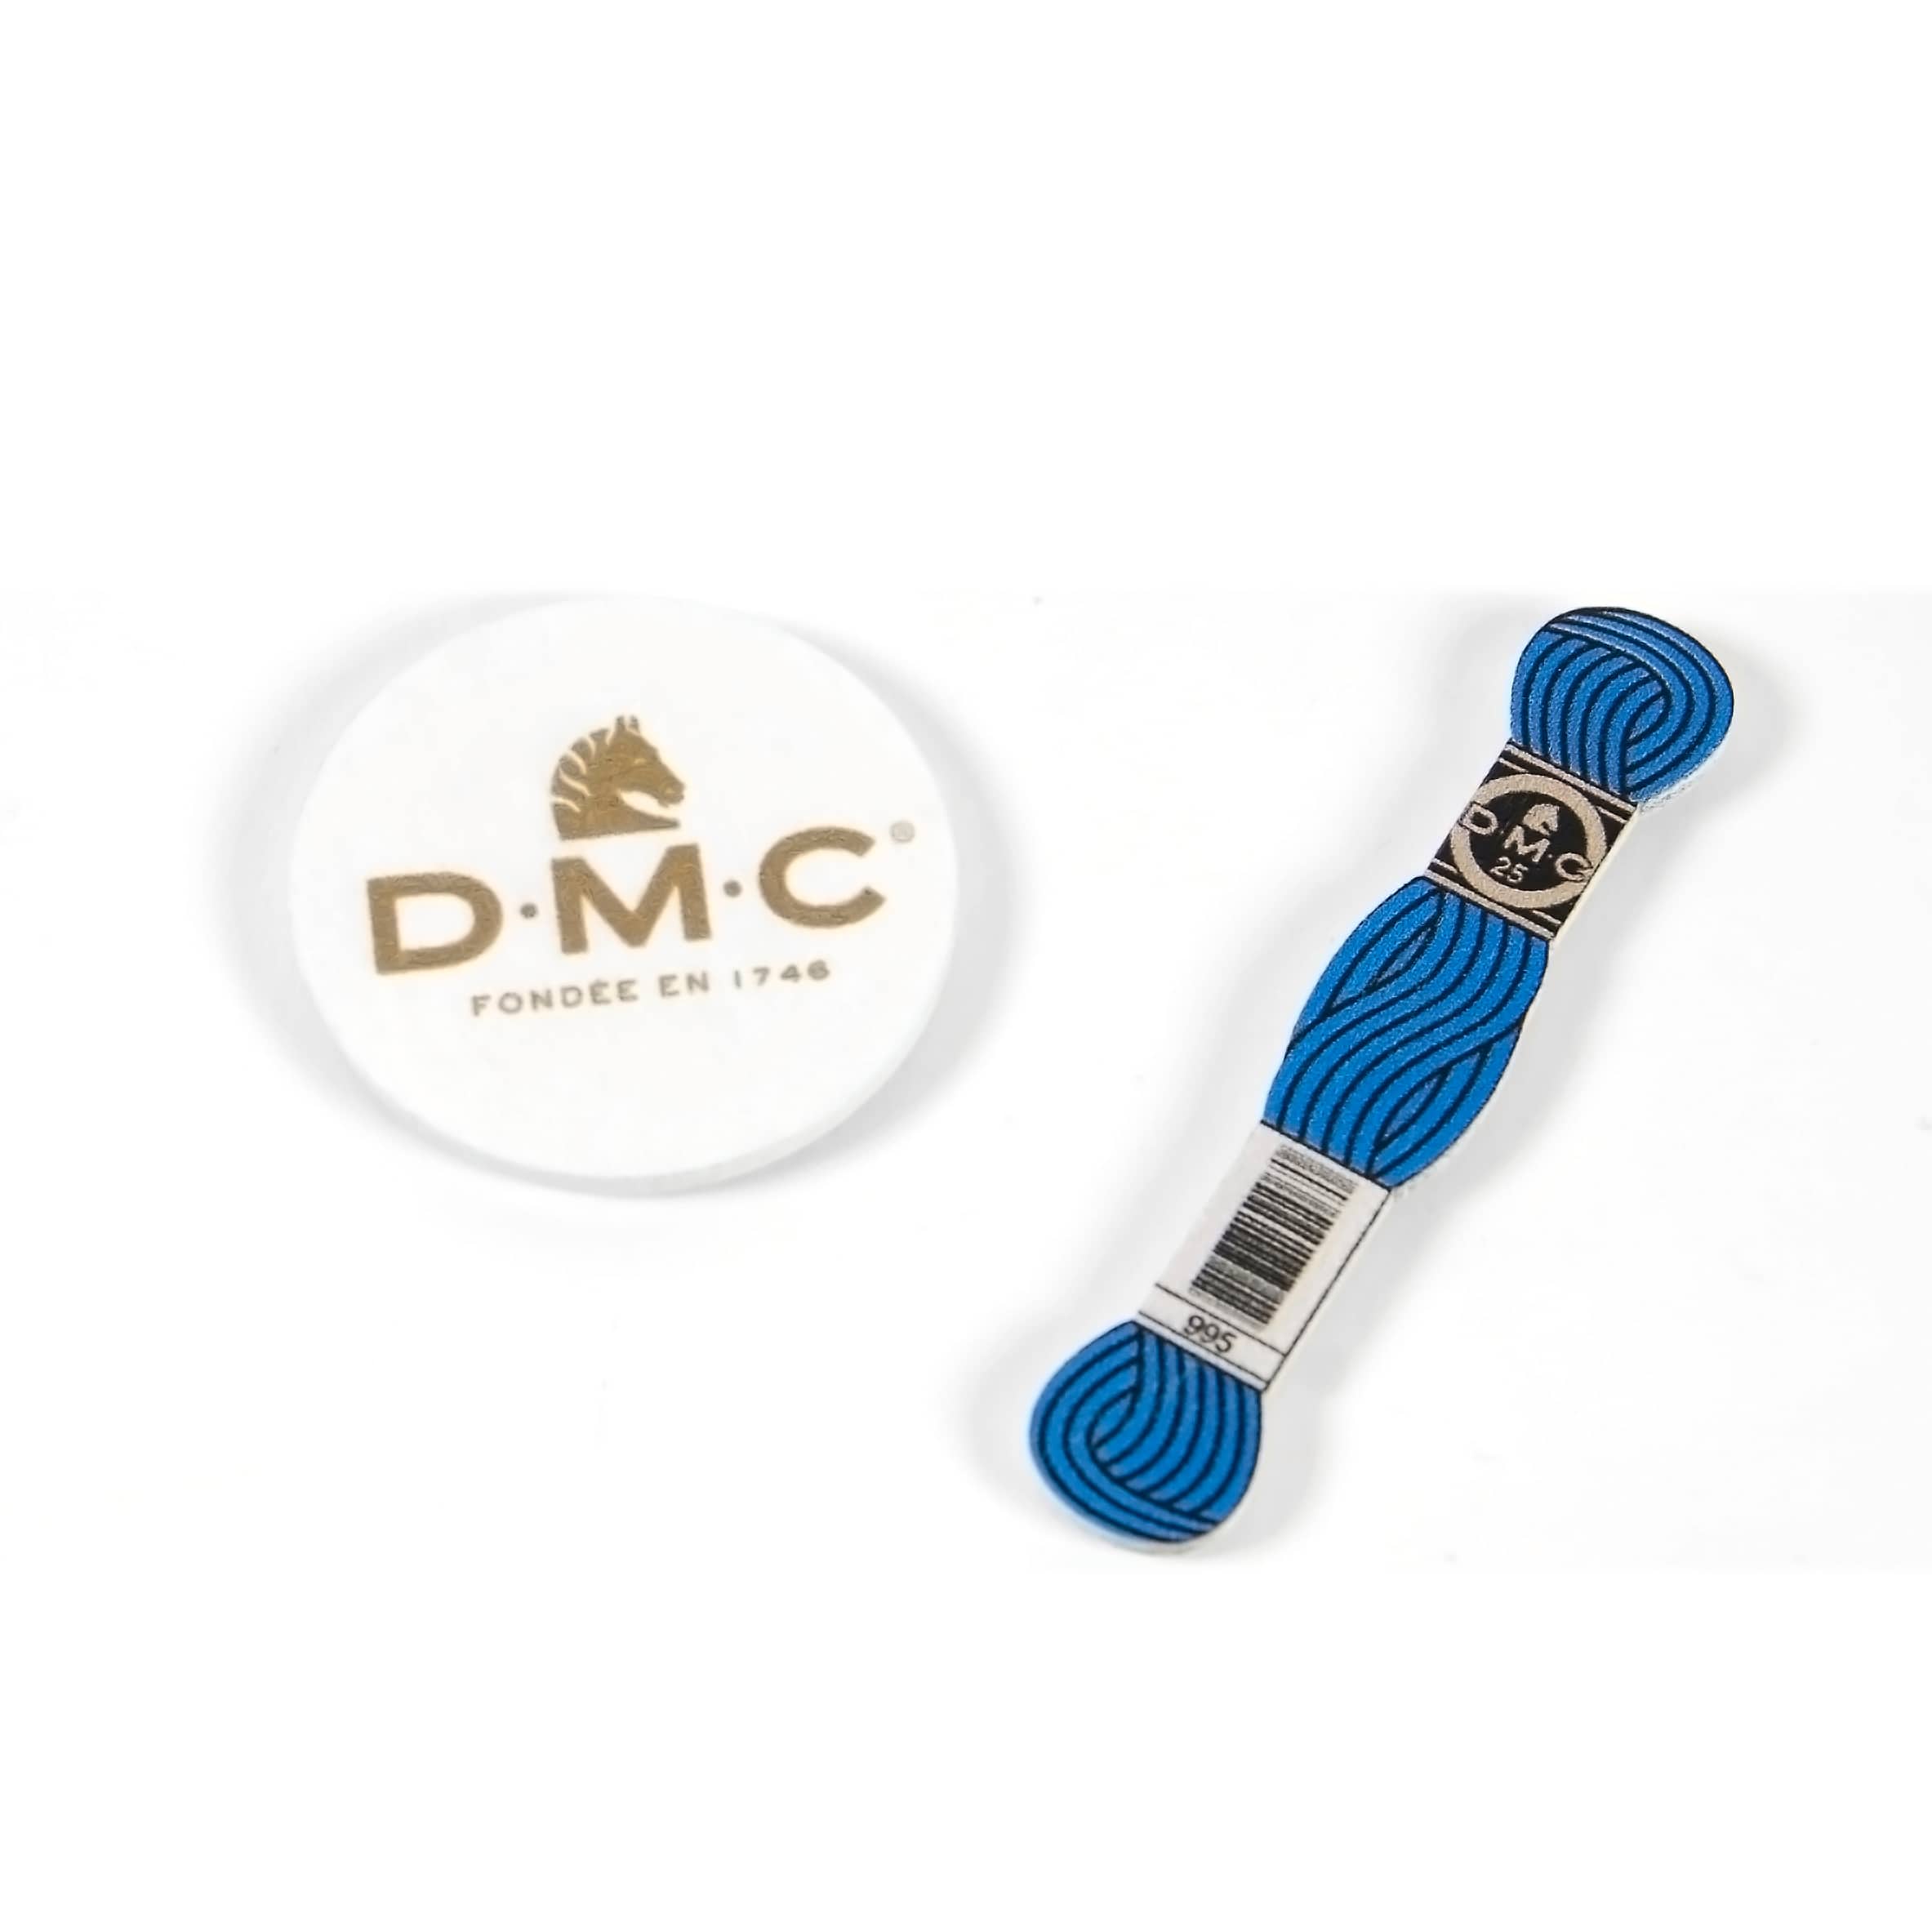 Assorted DMC&#xAE; Skein Needle Minder Set, 1pc.